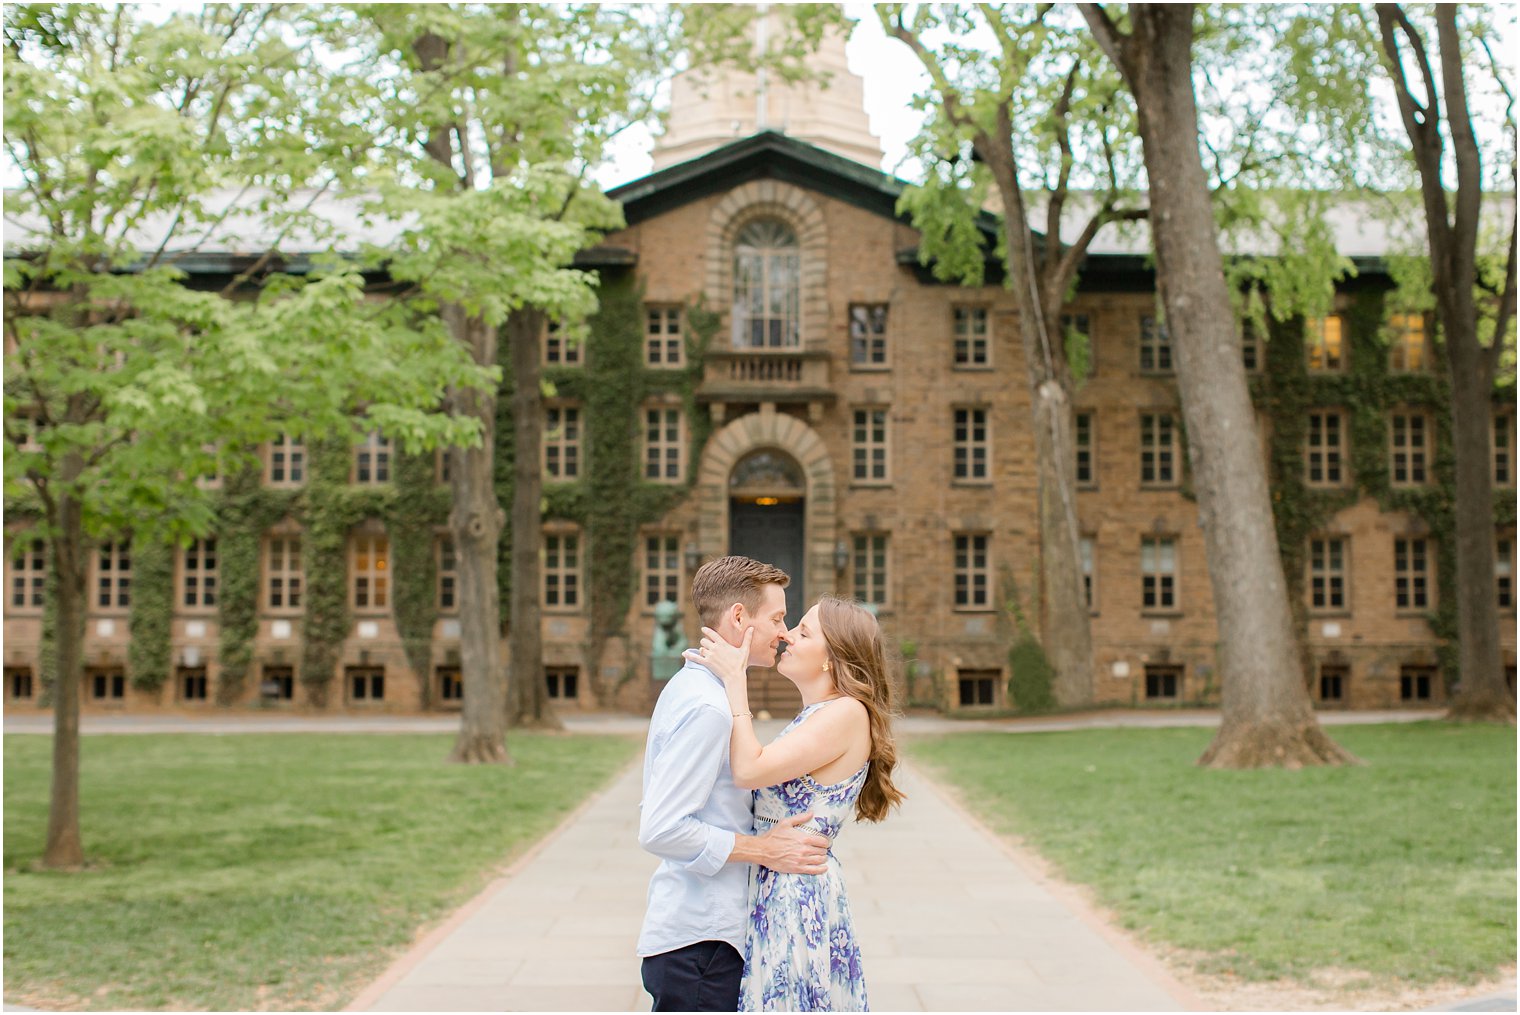 almost kiss at quad at princeton university